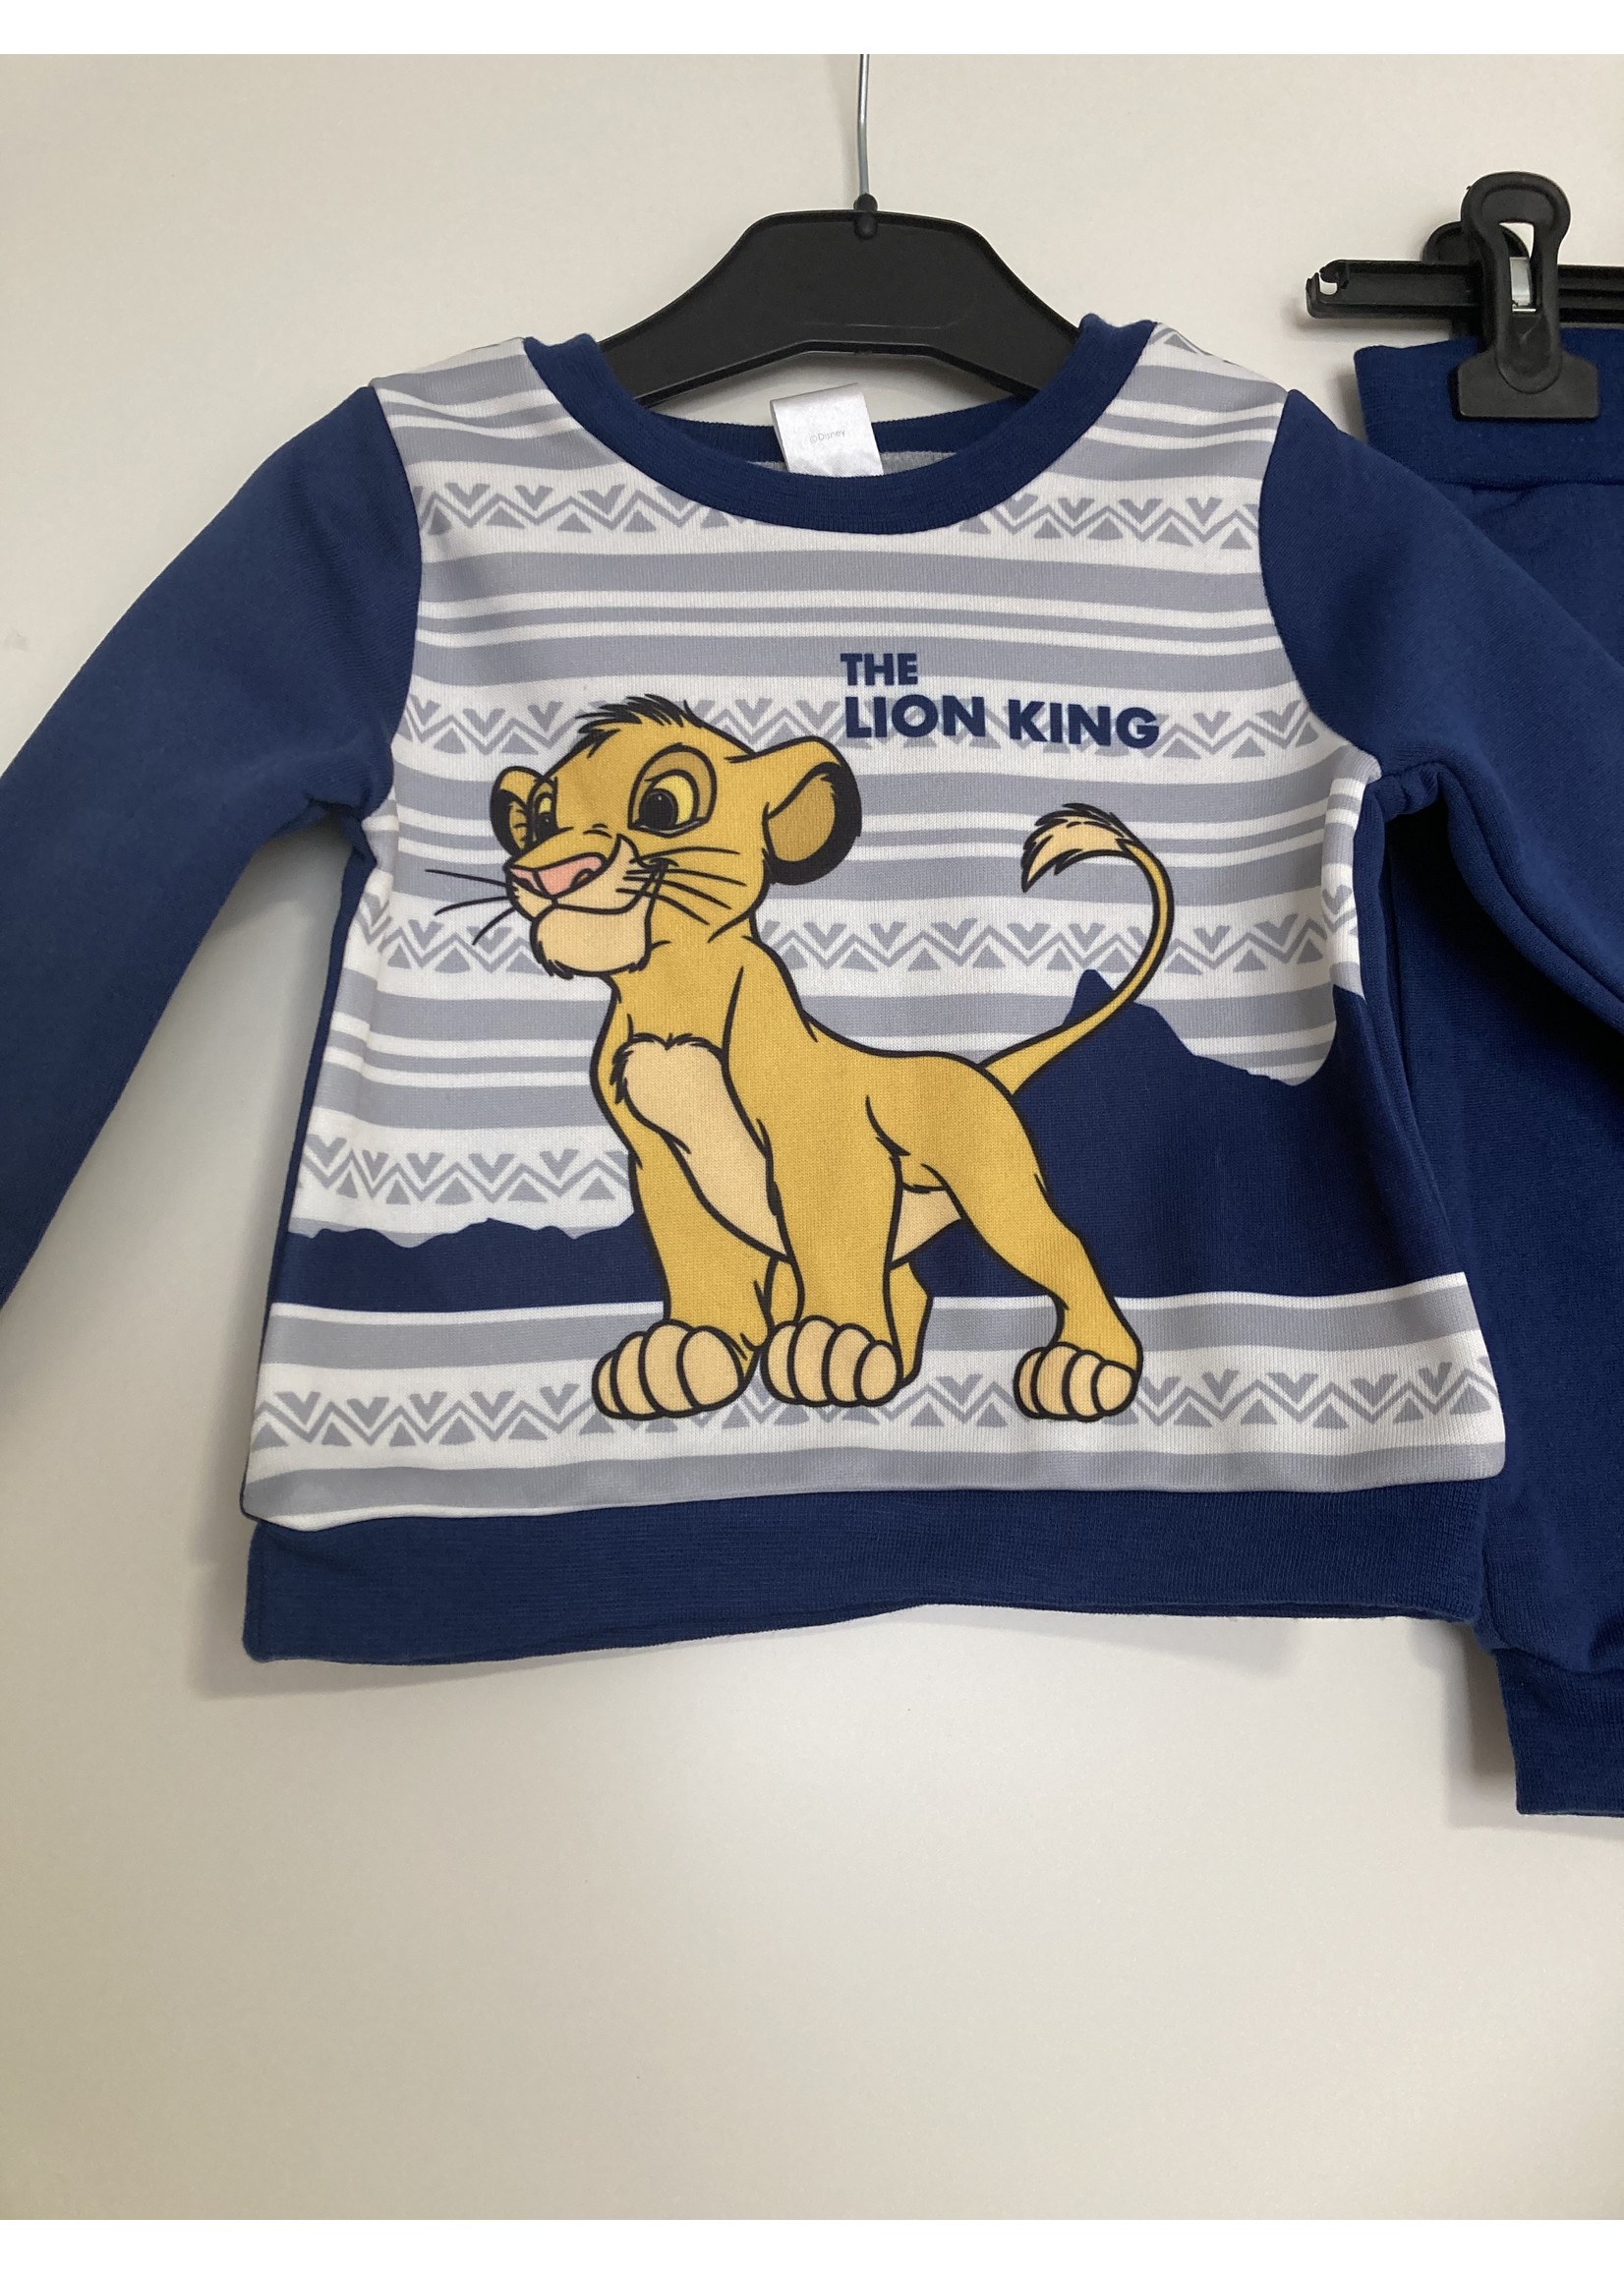 Disney Lion King baby set from Disney navy blue